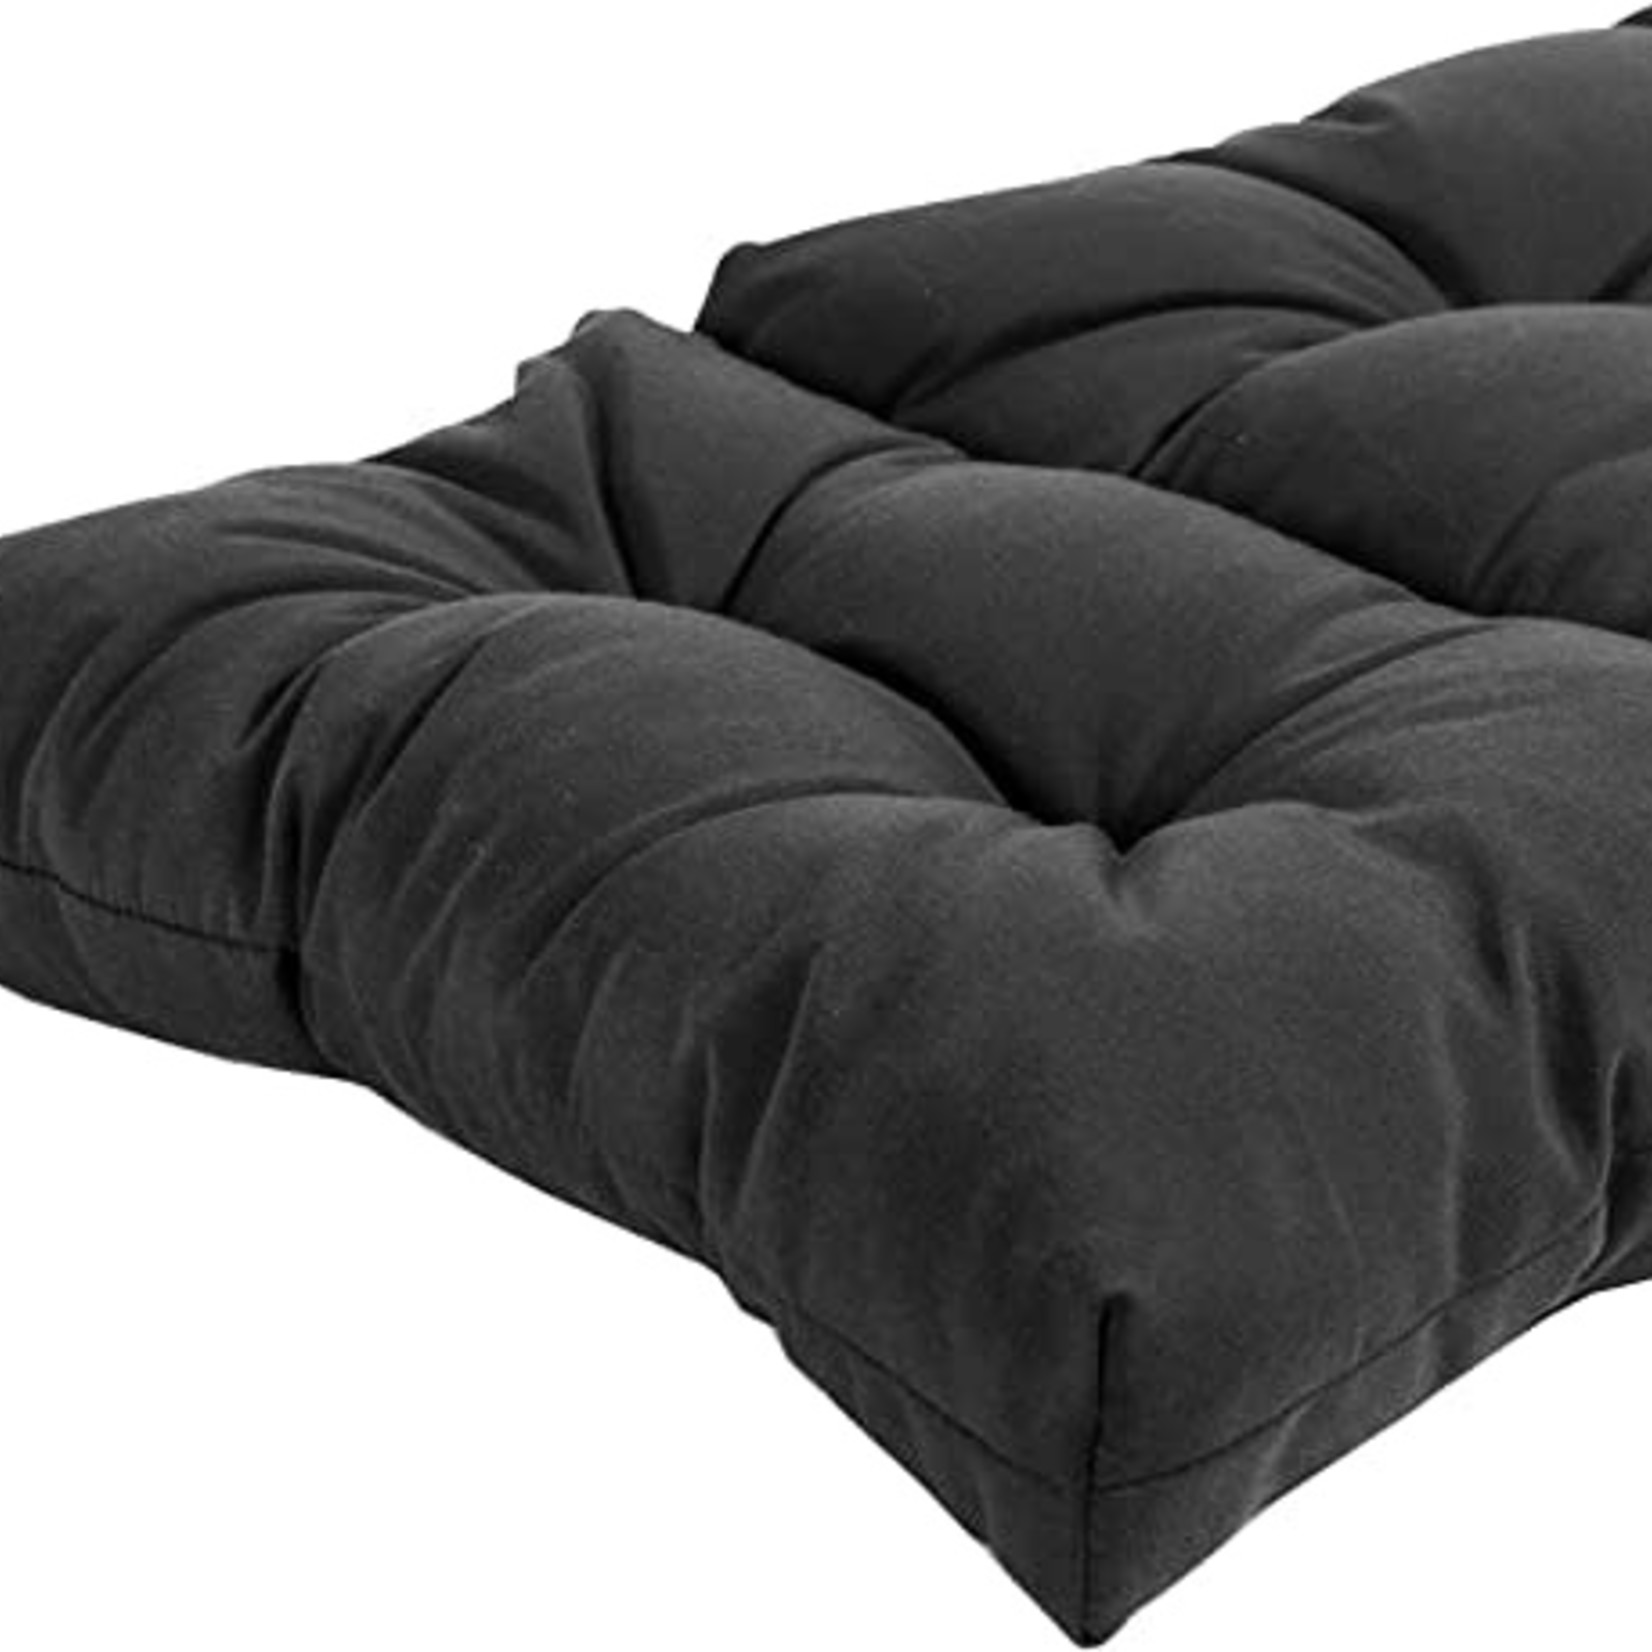 Qilloway Chaise Lounge Cushion- Dark Gray